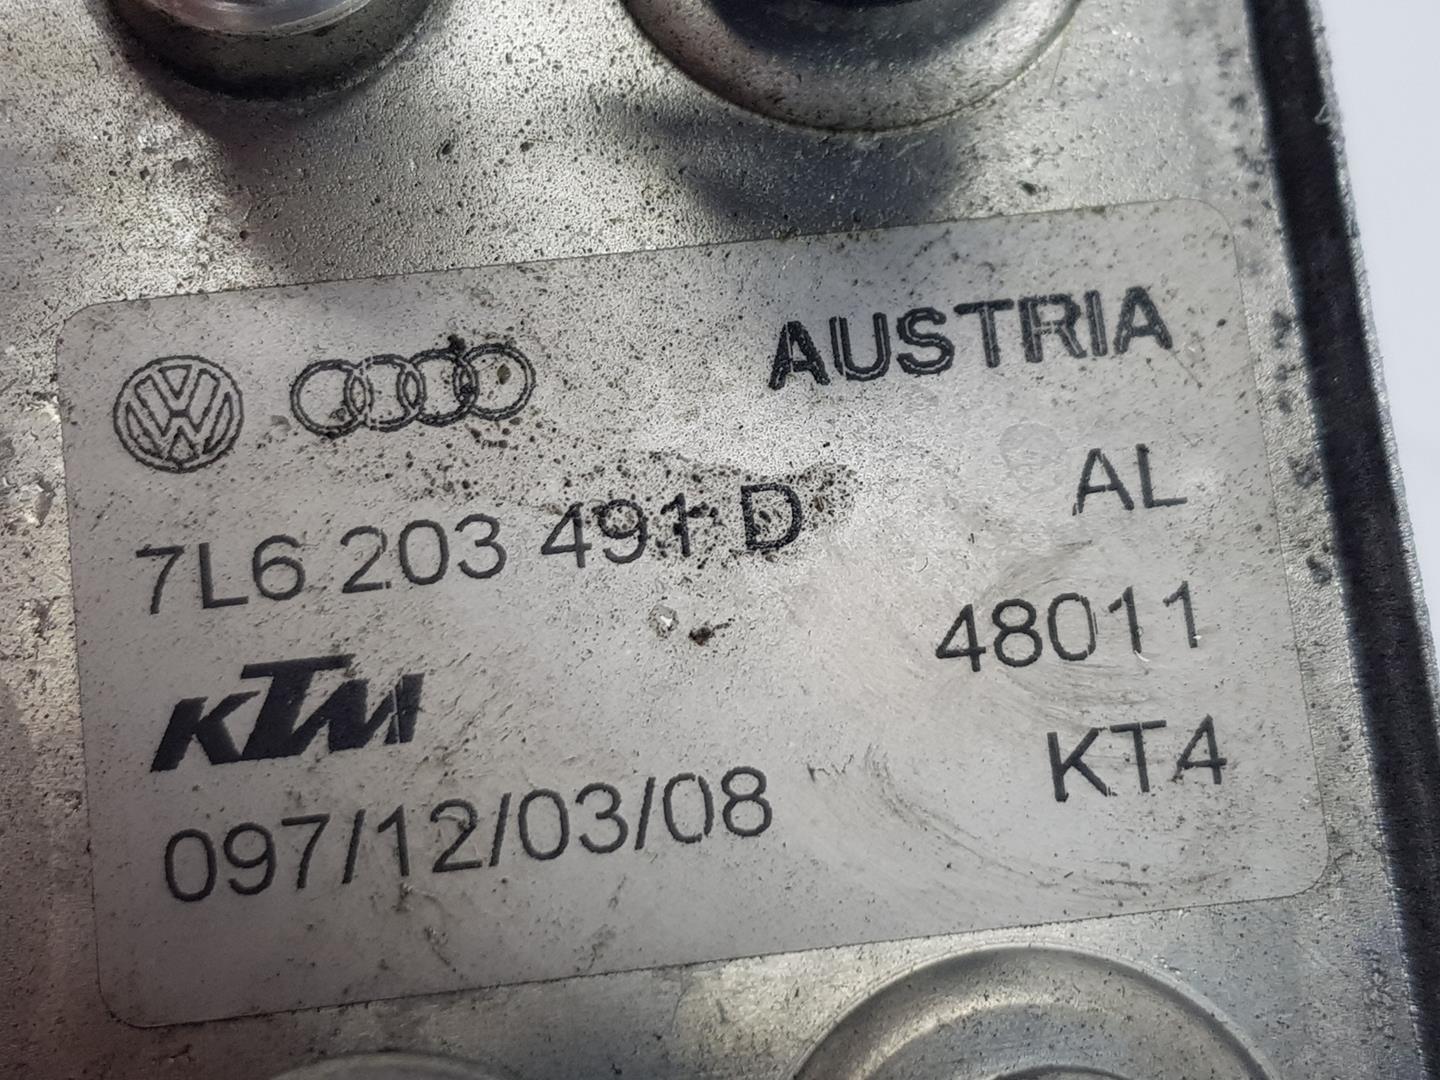 AUDI Q7 4L (2005-2015) Другие части внутренние двигателя 7L6203491D, 7L6203491D 19917495